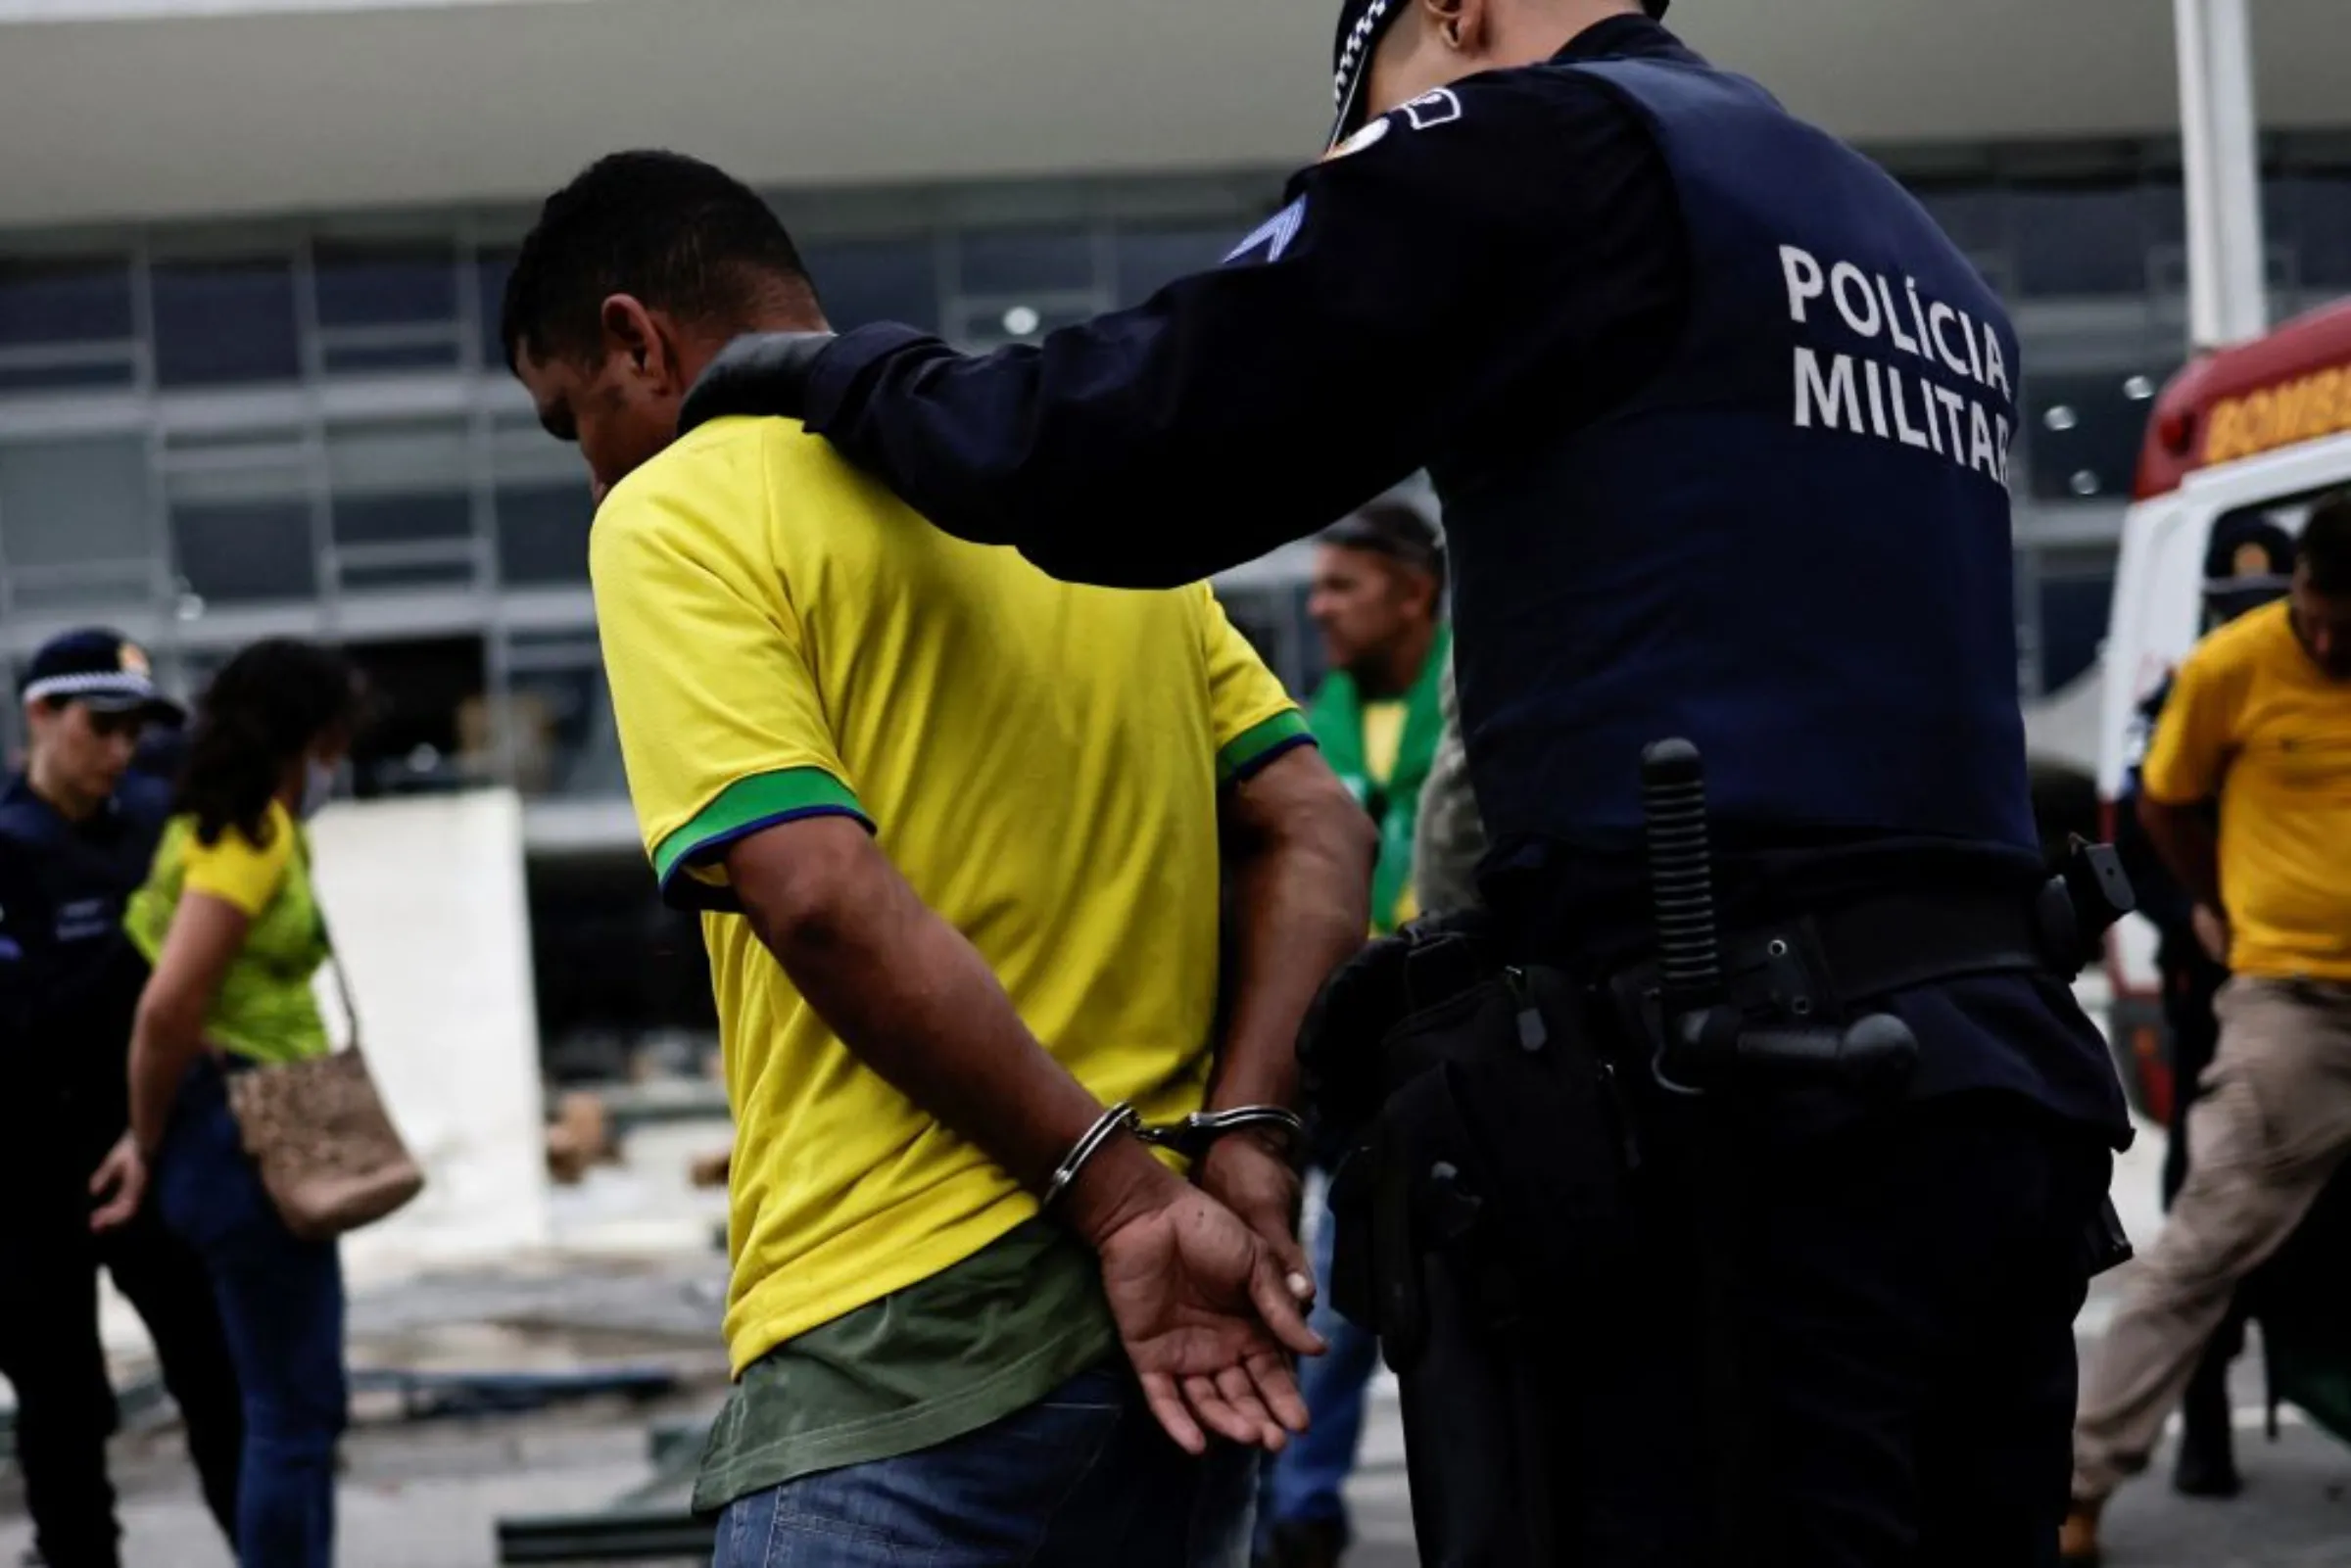 A supporter of Brazil's former President Jair Bolsonaro is detained during a demonstration against President Luiz Inacio Lula da Silva, outside Planalto Palace in Brasilia, Brazil, January 8, 2023. REUTERS/Ueslei Marcelino